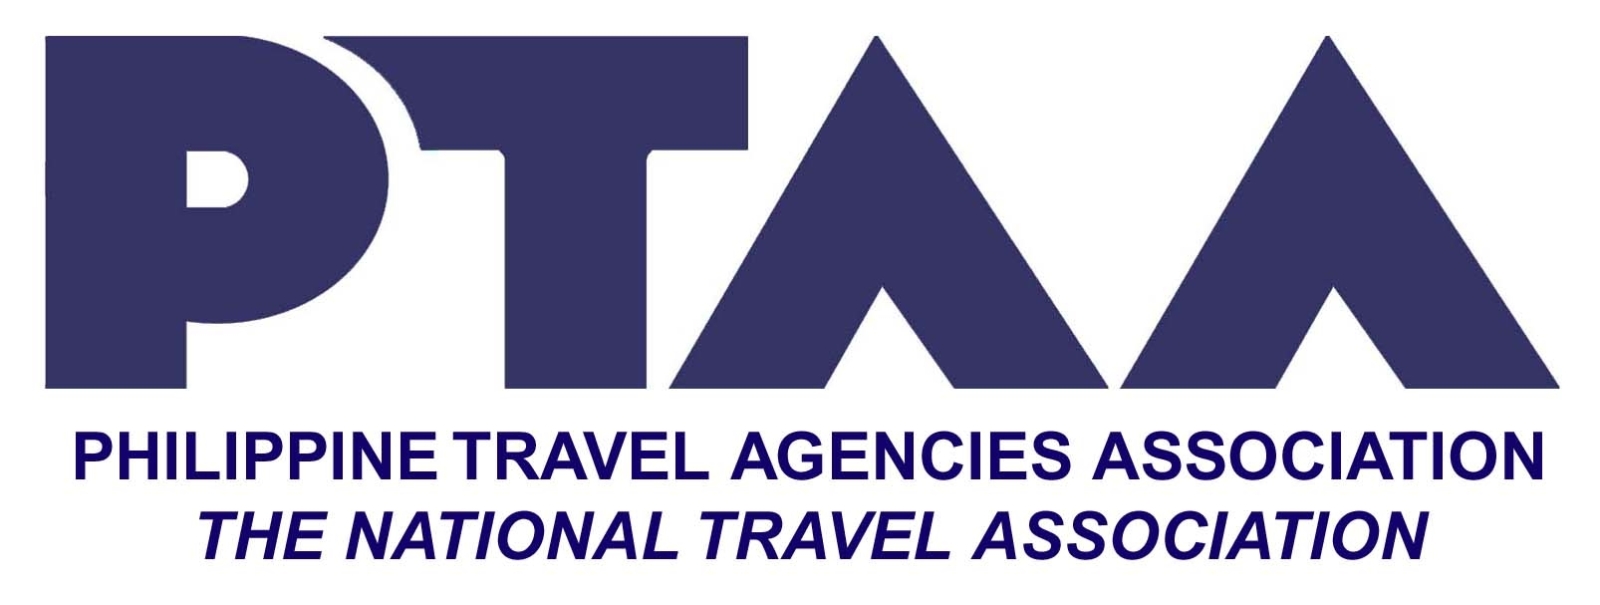 philippine travel agencies association (ptaa)